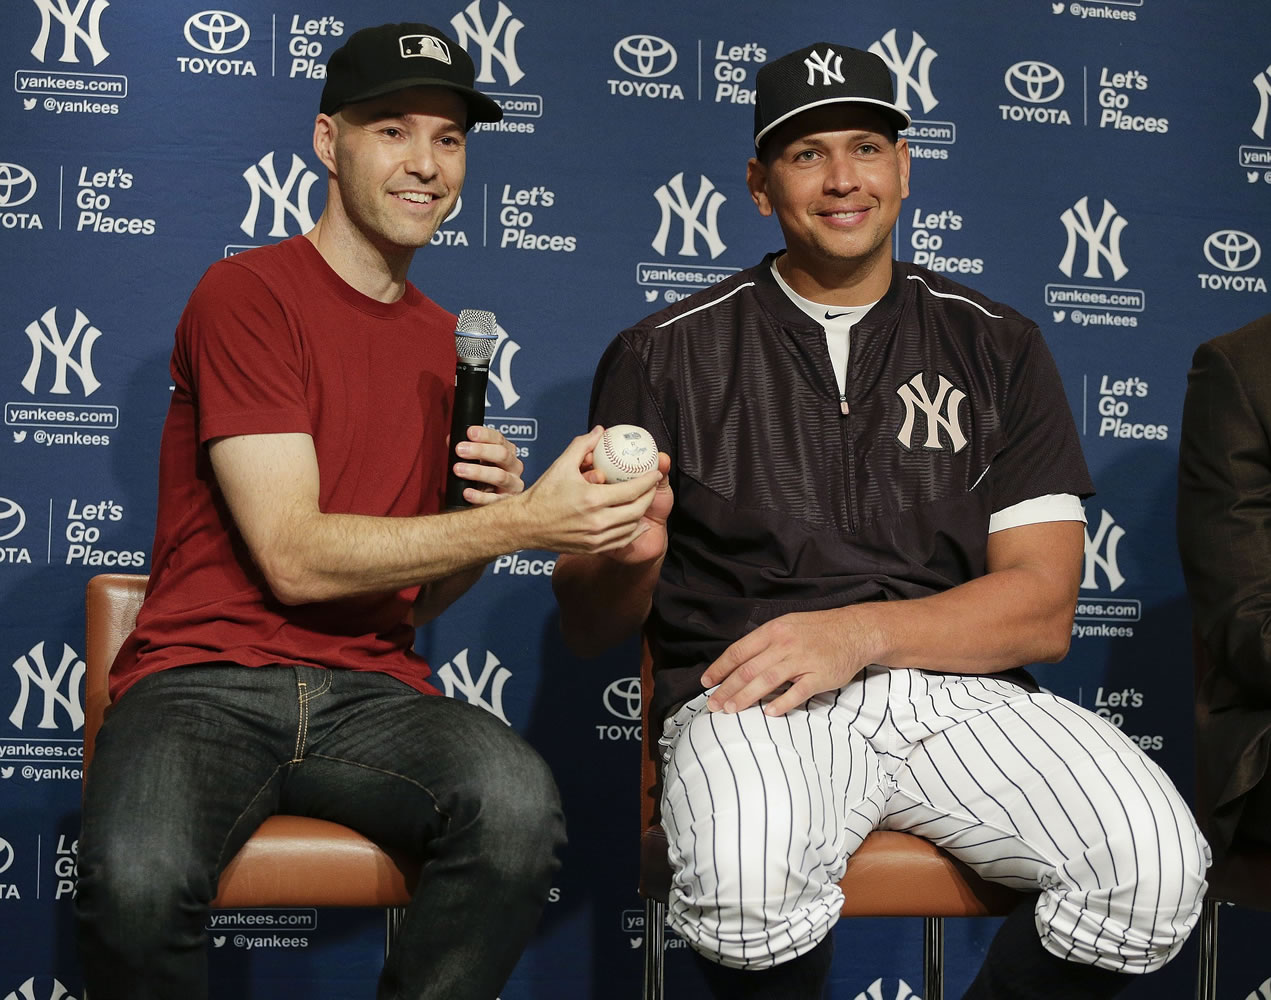 Yank new york yankees baseball jersey ees news: MLB soon to